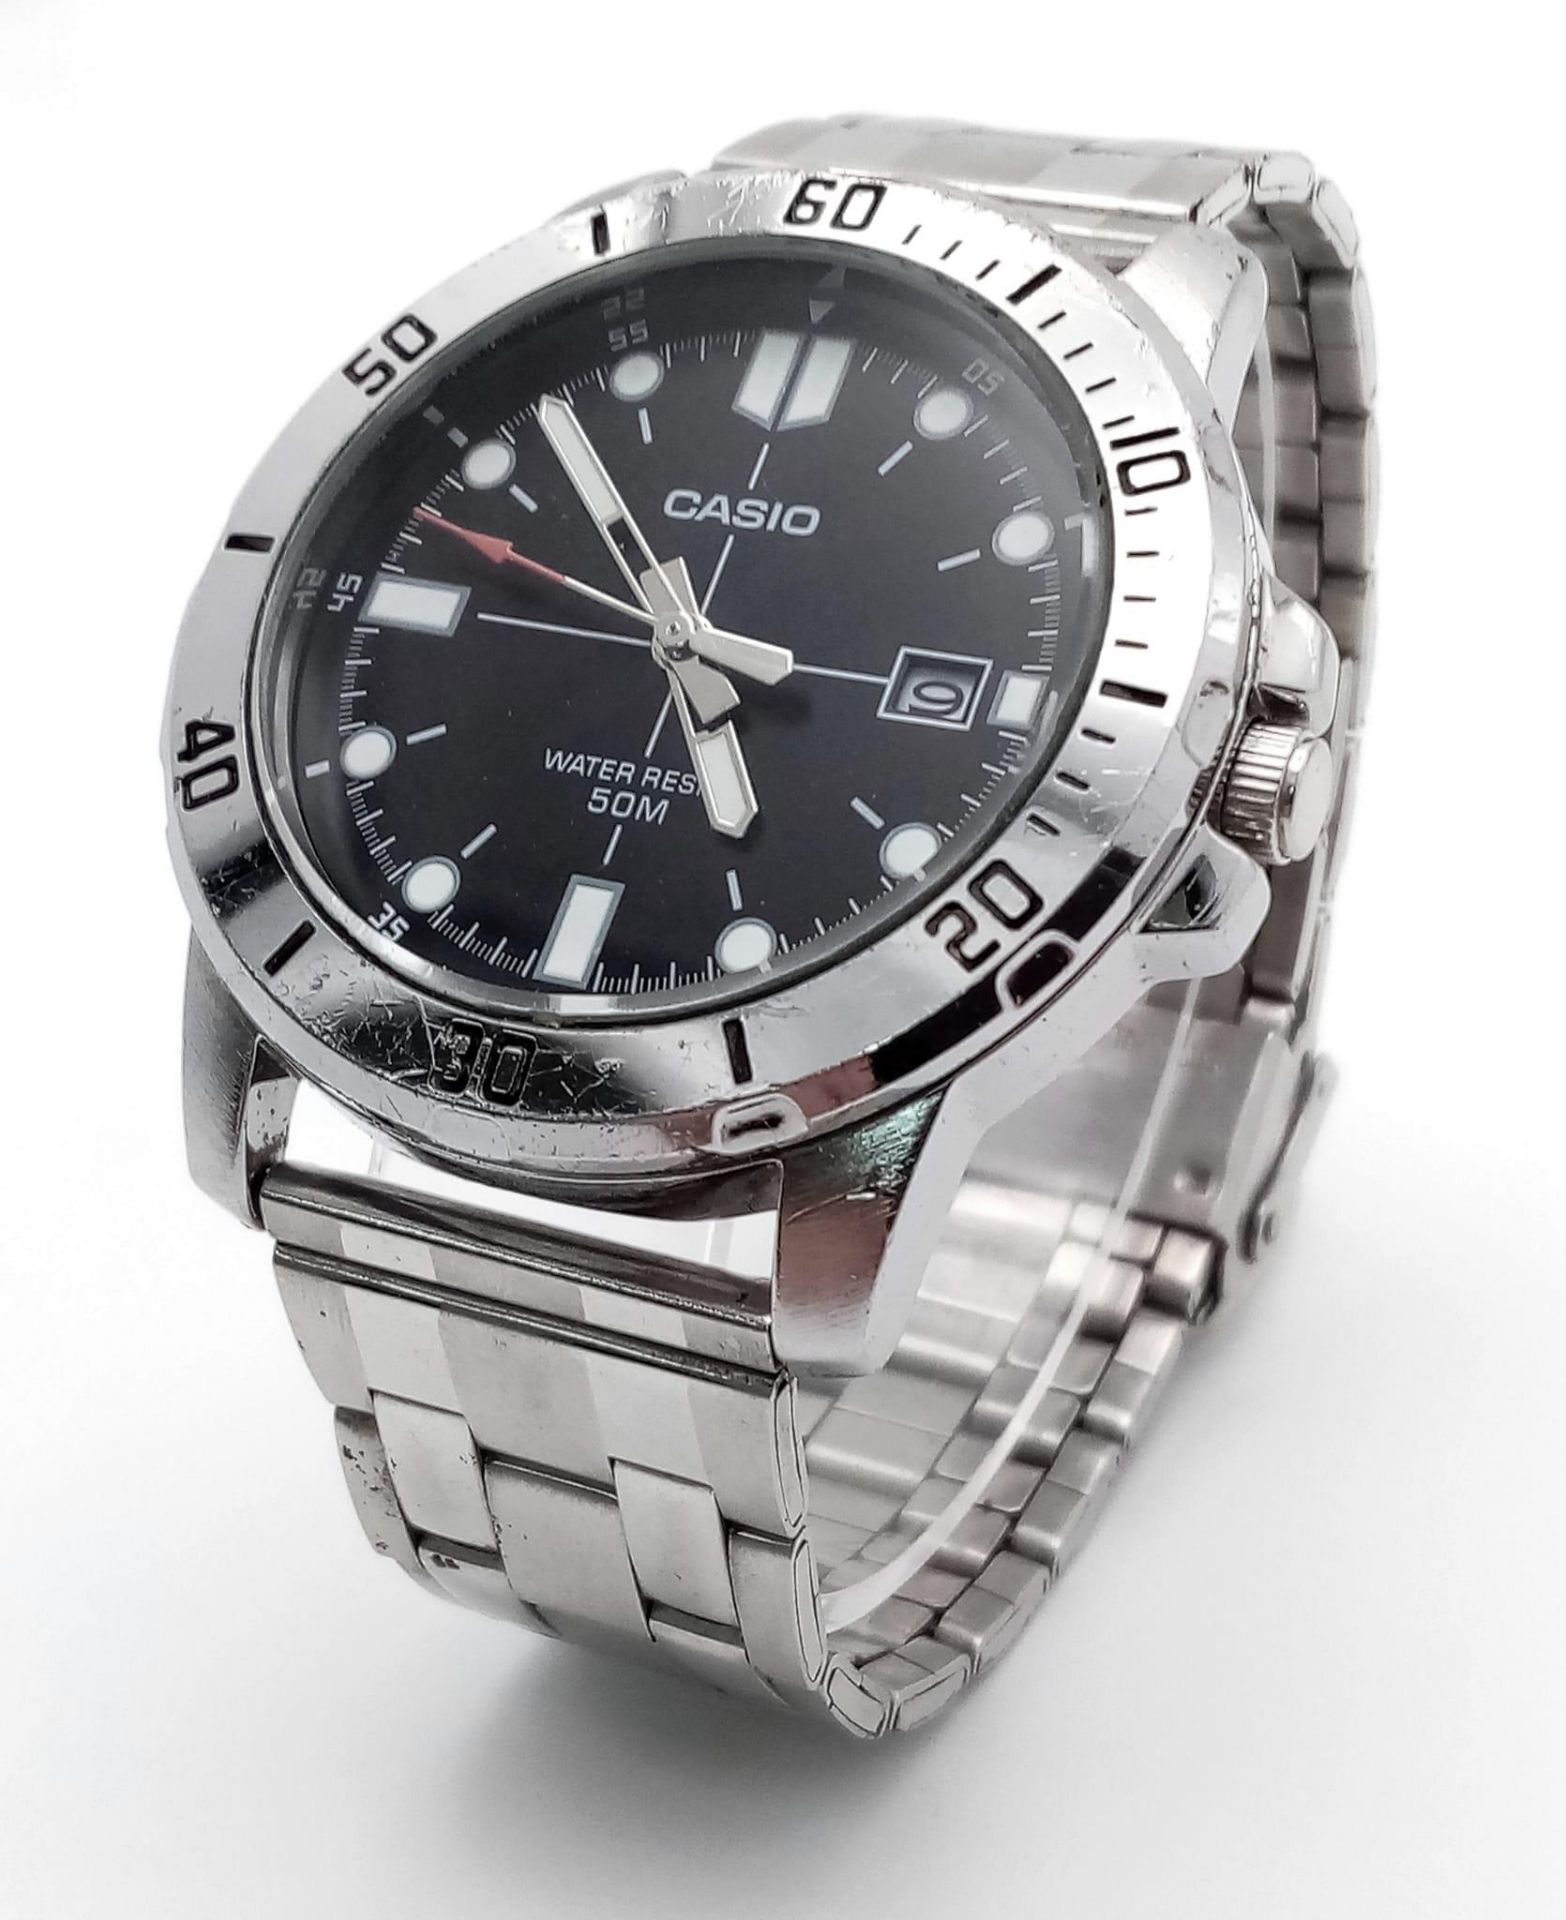 A Casio Quartz Gents Watch. Stainless steel bracelet and case - 44mm. Black dial with date window. - Bild 2 aus 6